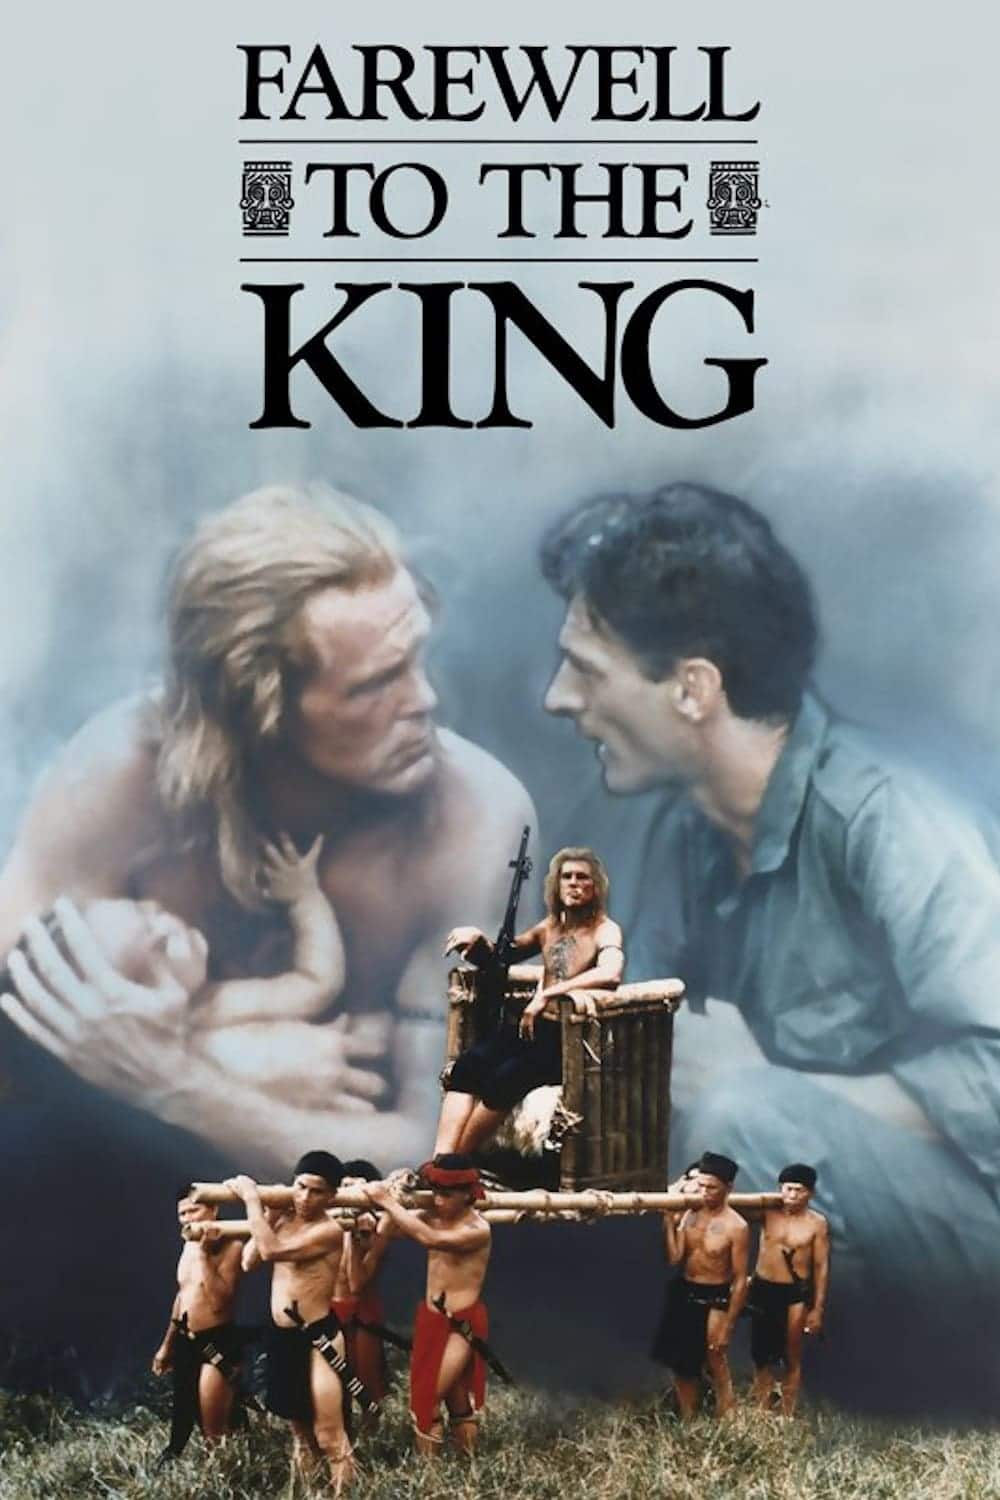 Plakat von "Farewell to the King"